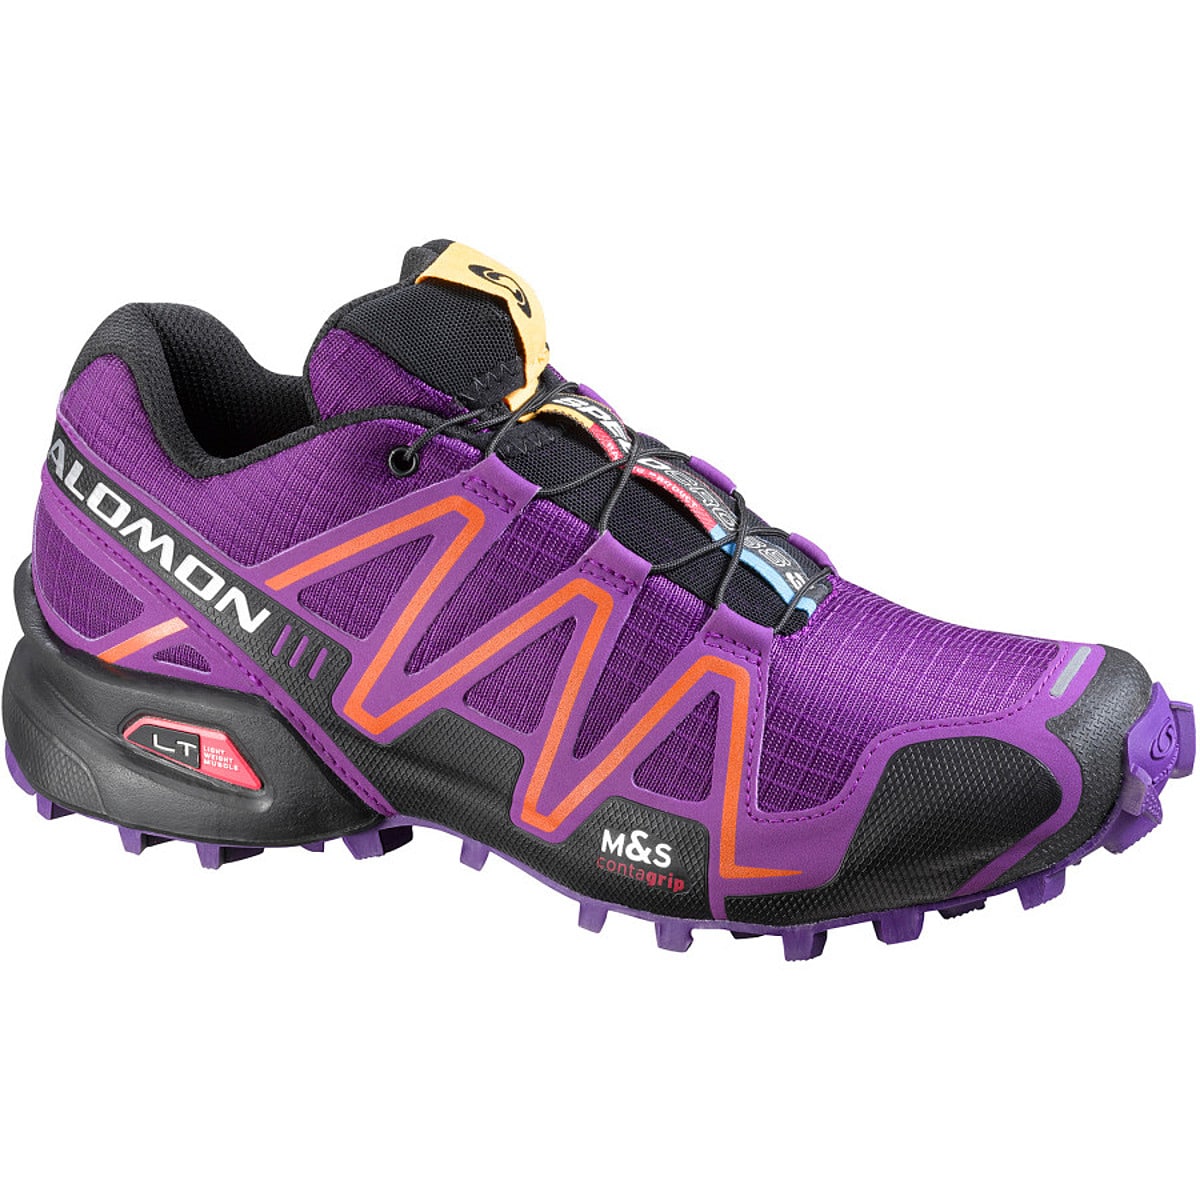 Salomon Speedcross 3 Trail Running Shoe - Women's -